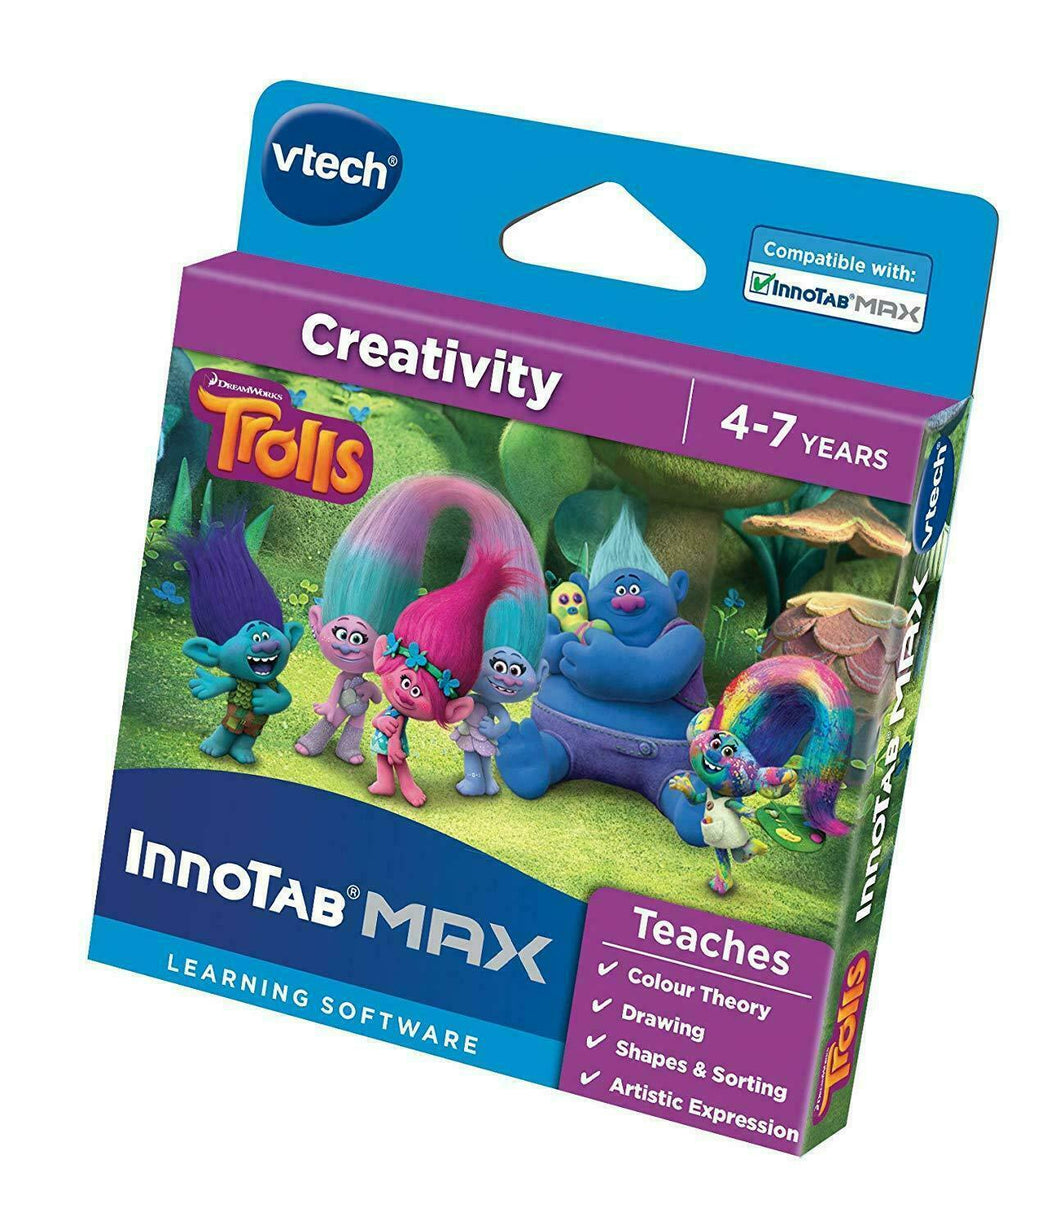 VTech Innotab Max Trolls Creativity Learning Software